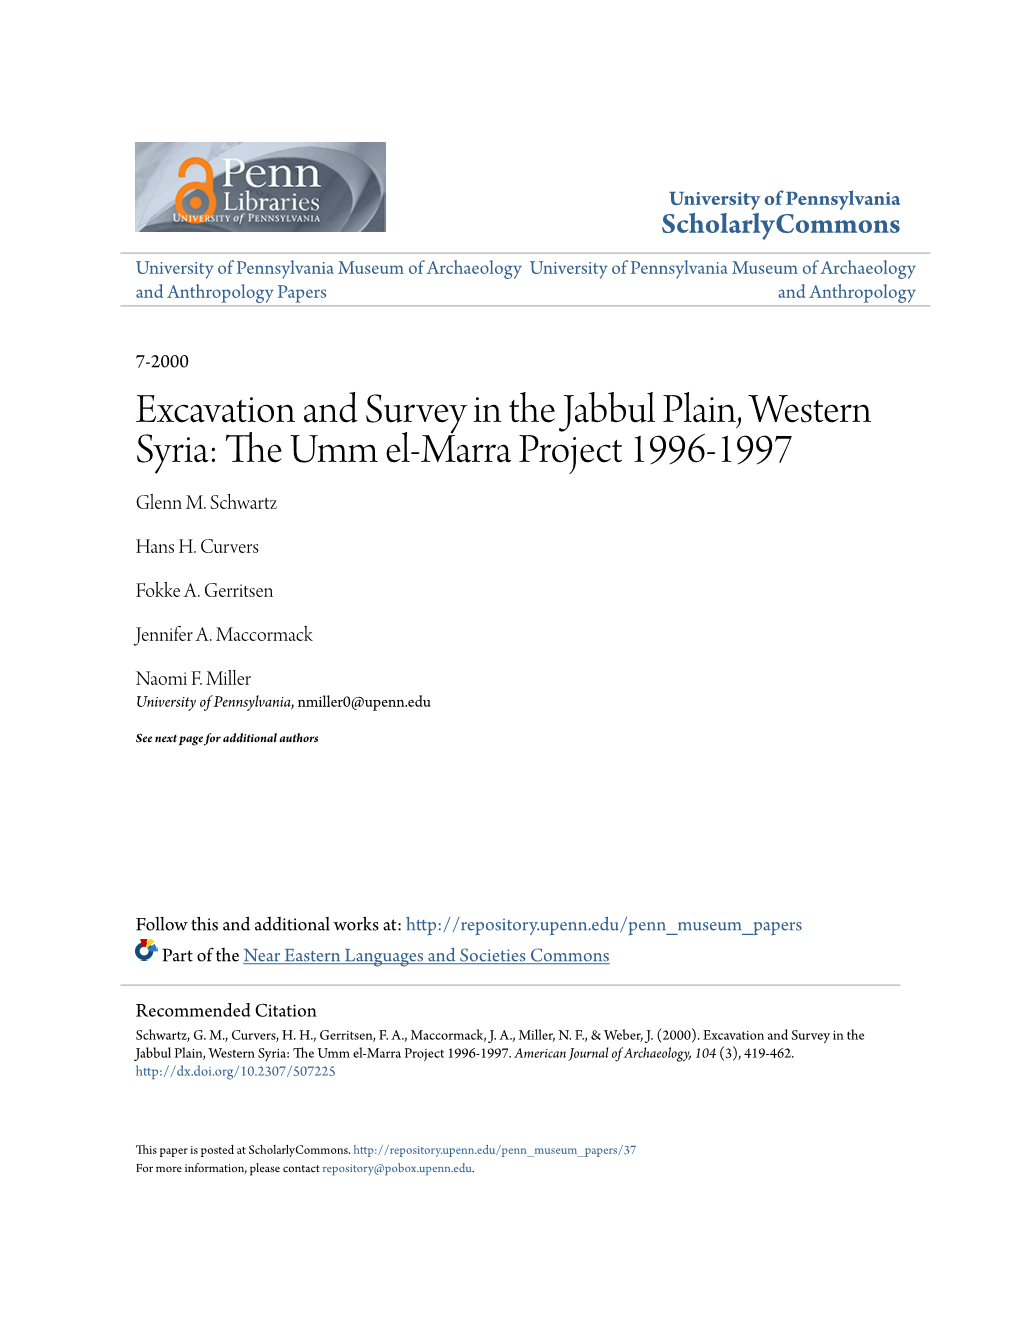 Excavation and Survey in the Jabbul Plain, Western Syria: the Mmu El-Marra Project 1996-1997 Glenn M